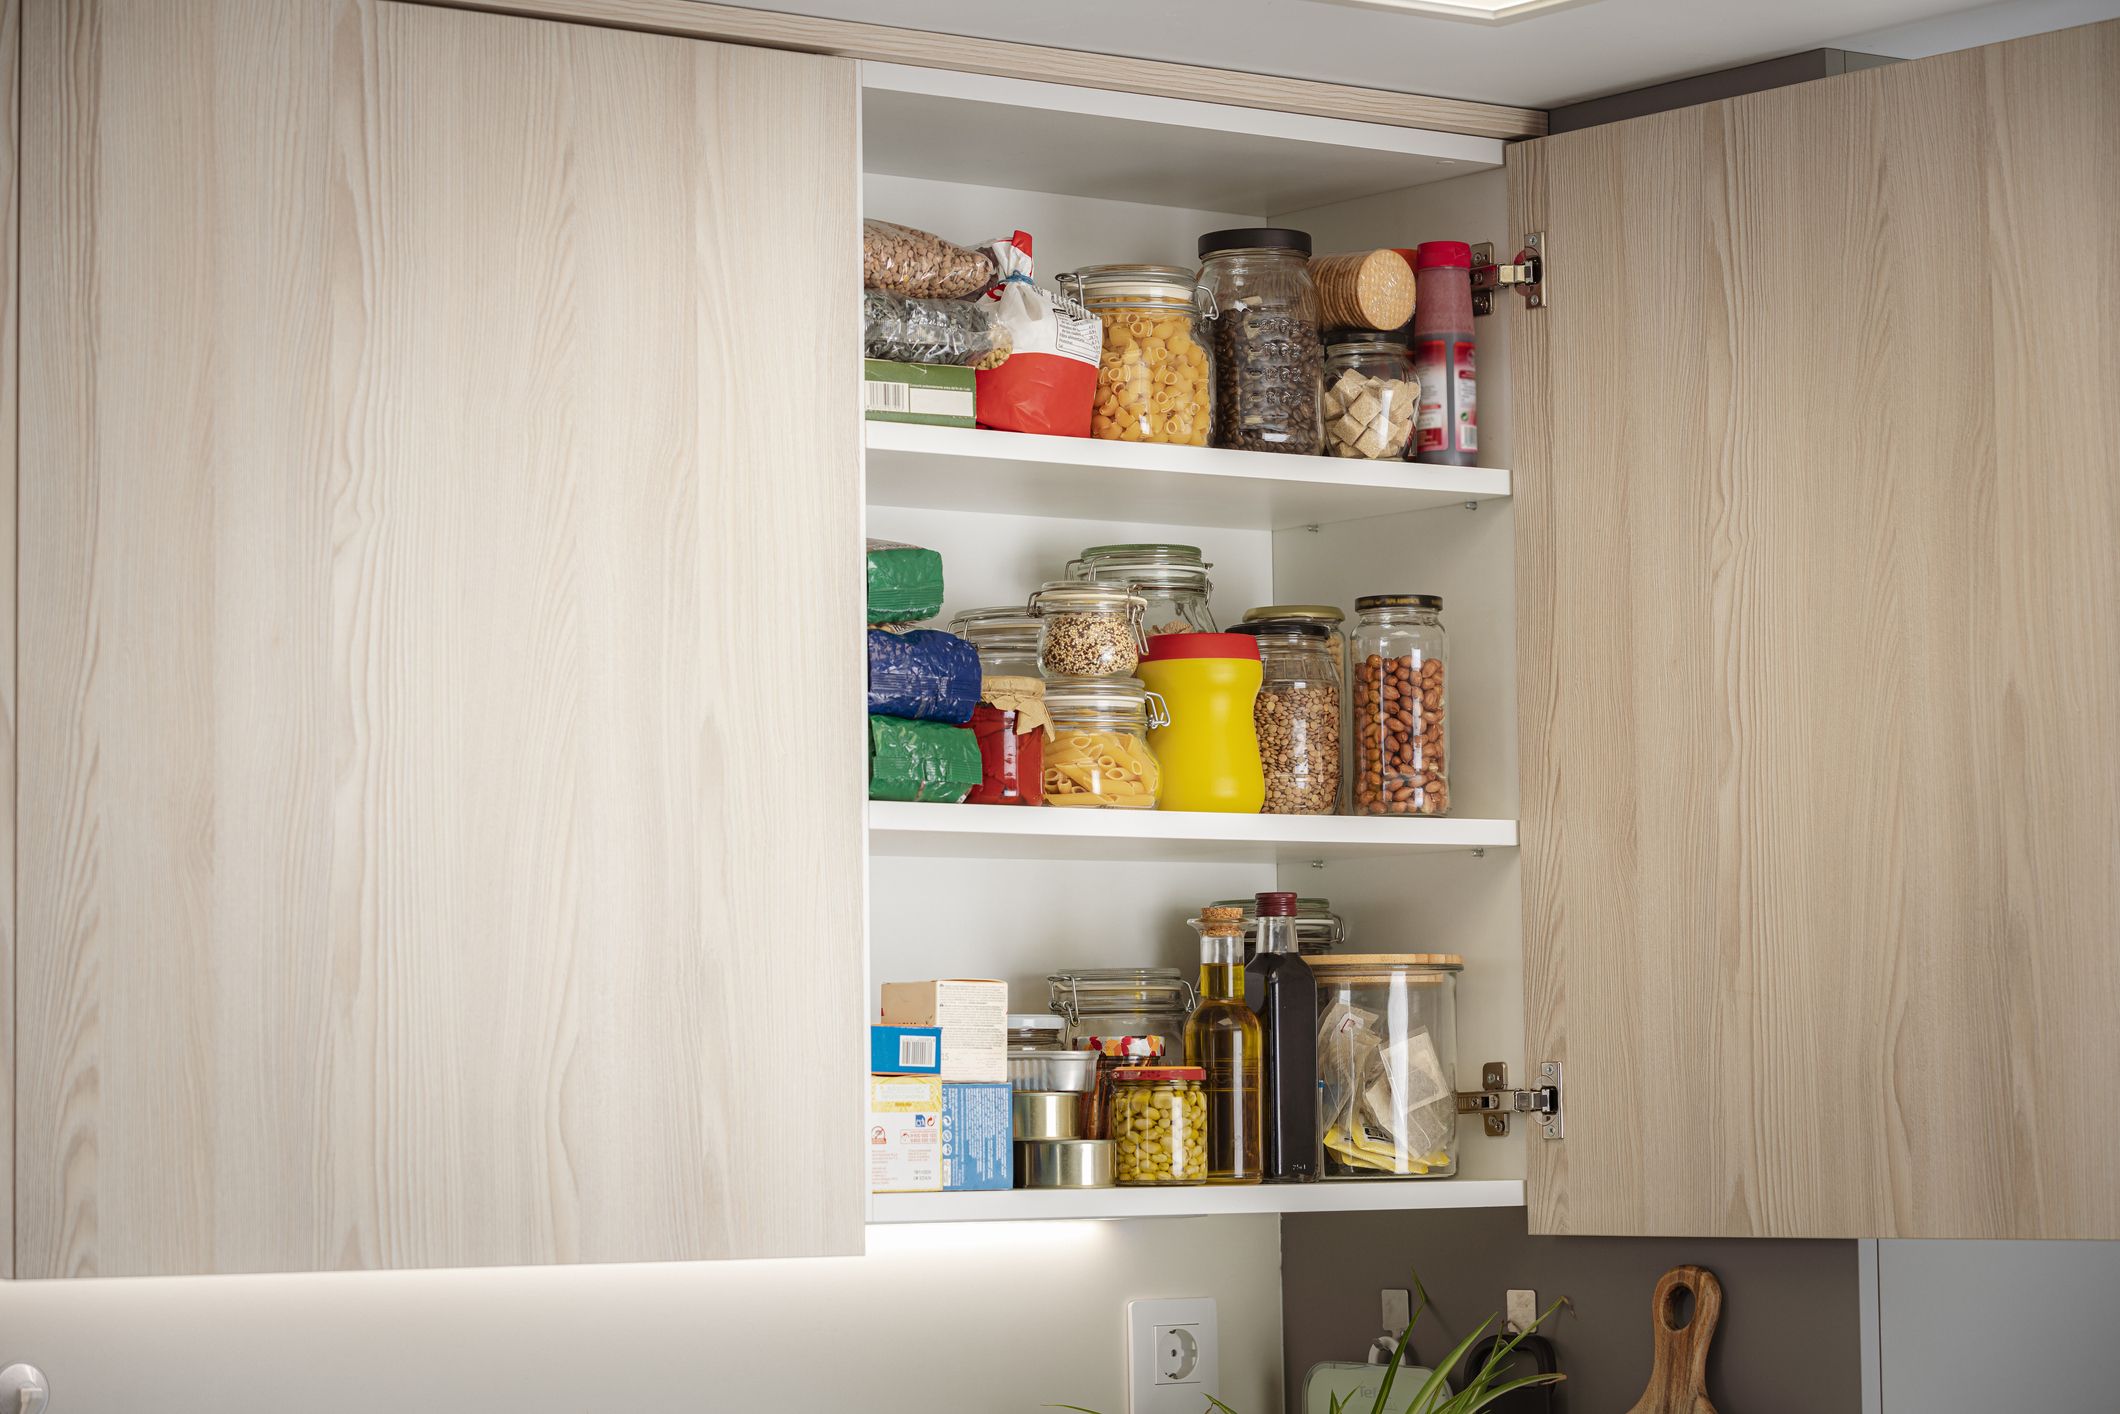 https://hips.hearstapps.com/hmg-prod/images/how-to-organize-kitchen-cabinets-similar-items-65849cbf87e4f.jpg